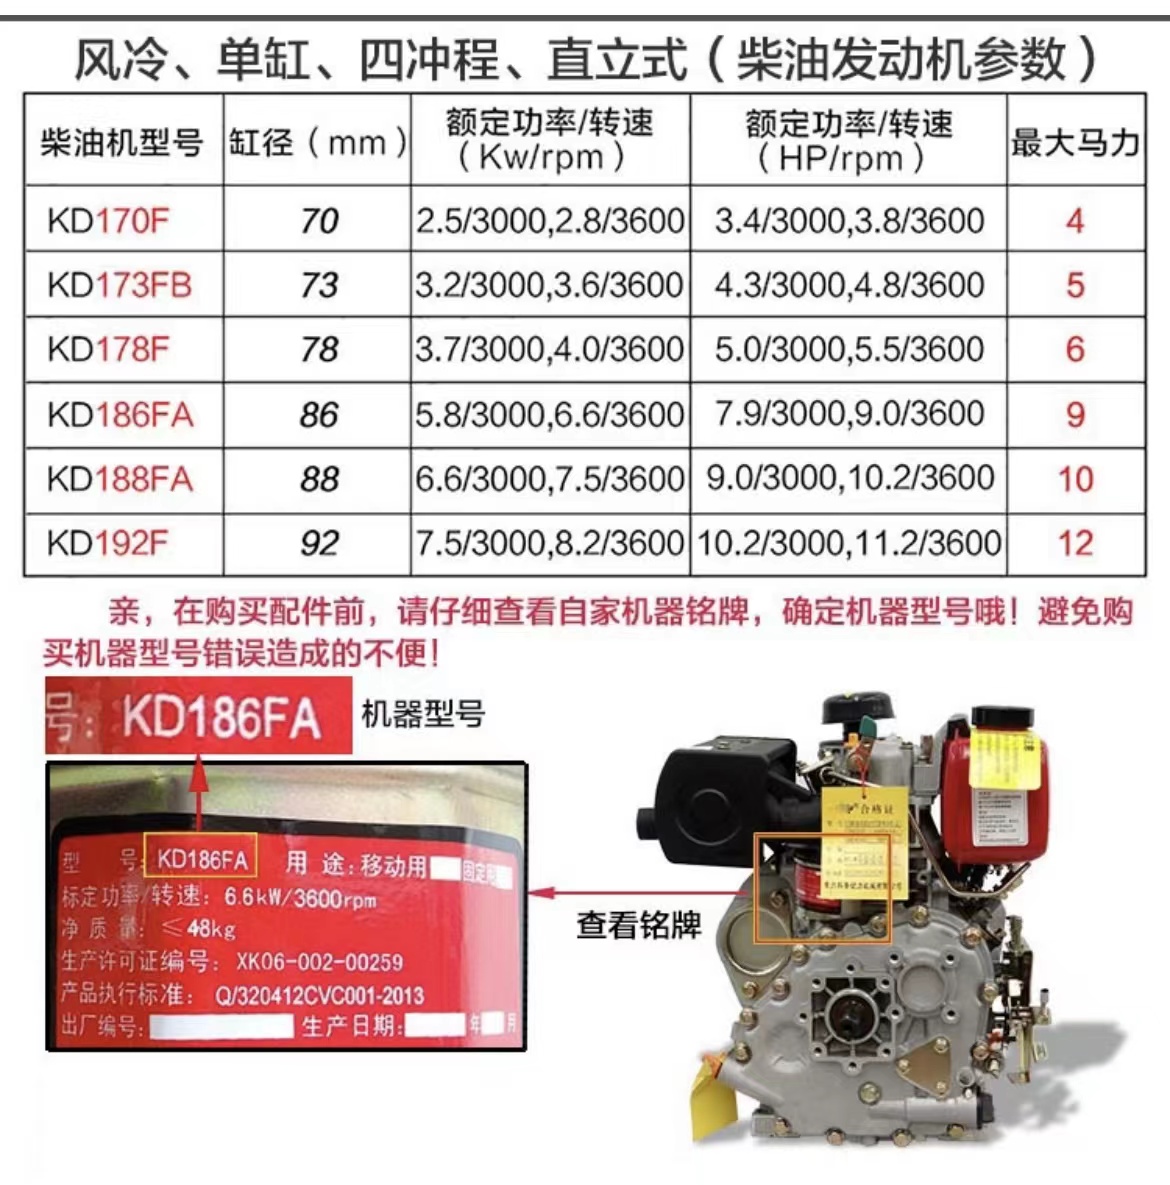 Air cooled diesel accessories generator road cutting machine accessories high pressure tubing S195 SD1100